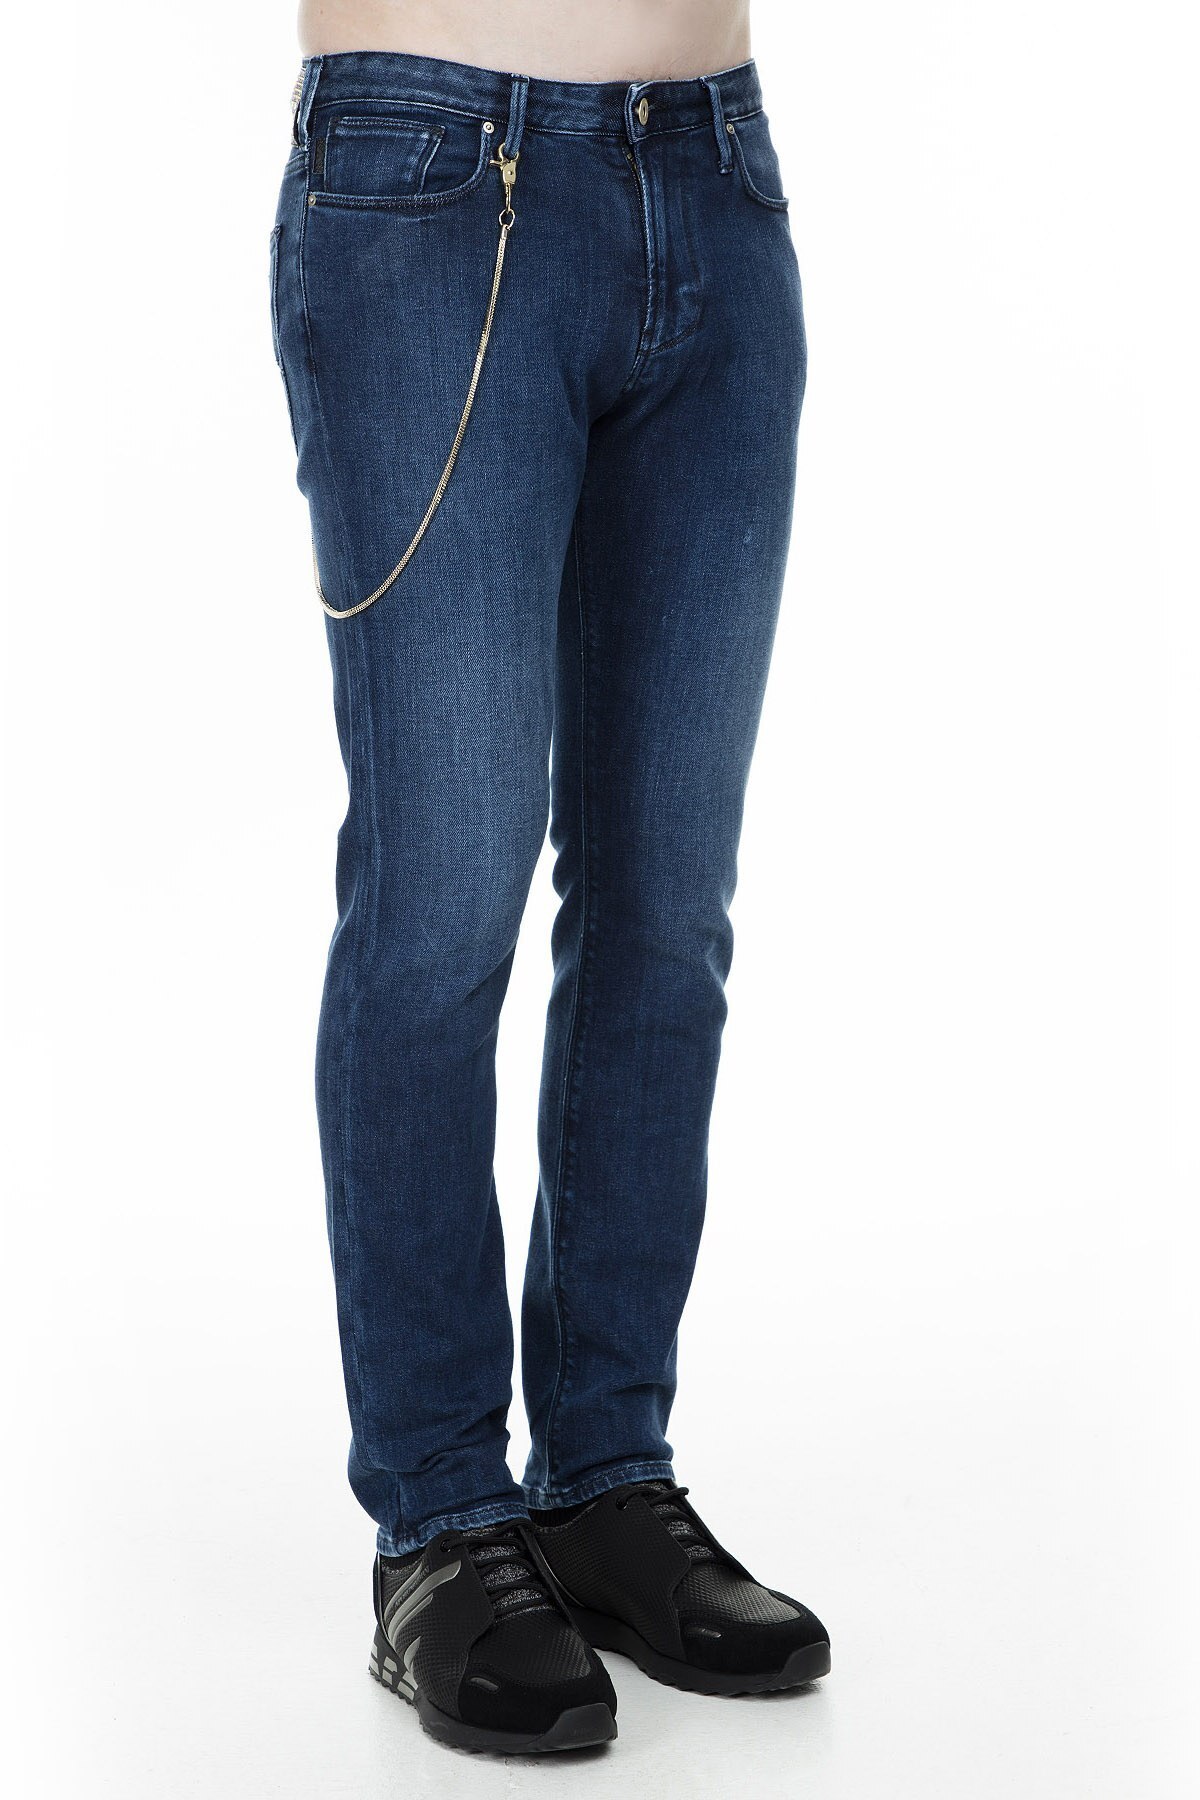 Emporio Armani J06 Jeans Erkek Kot Pantolon 6G1J06 1D6UZ 0941 LACİVERT